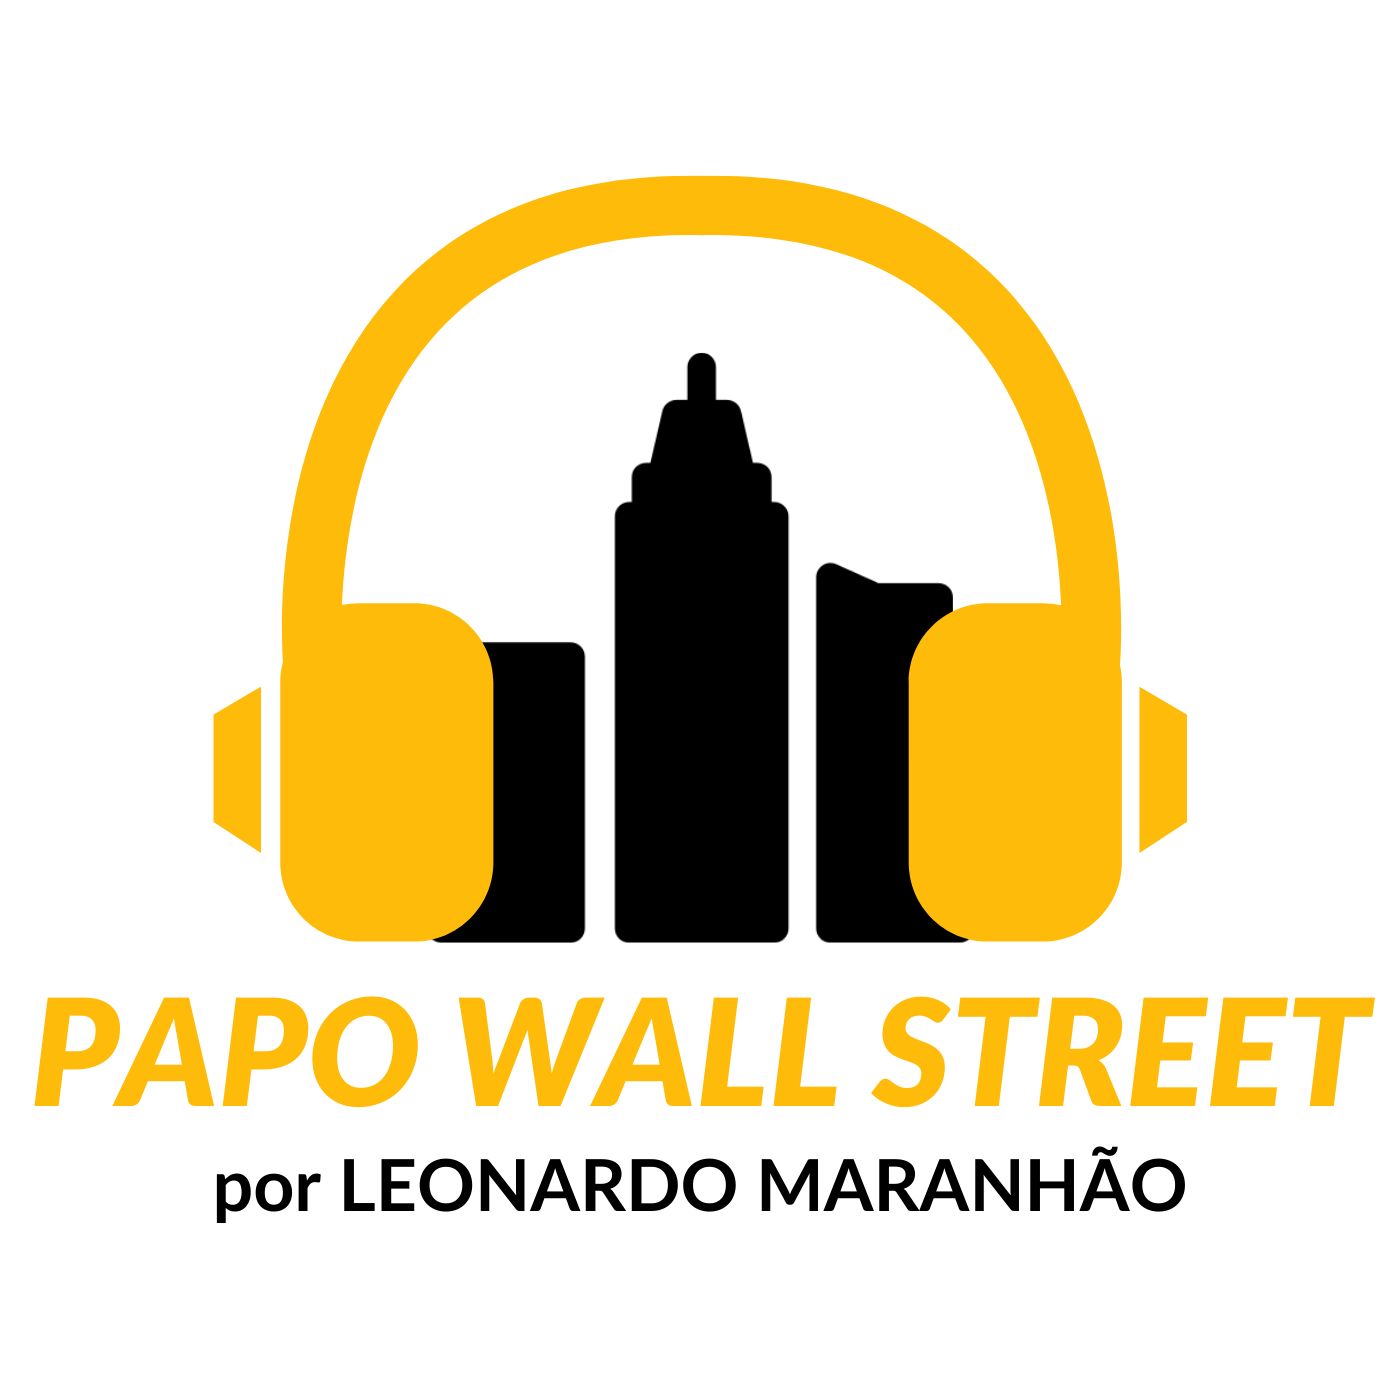 Papo Wall Street